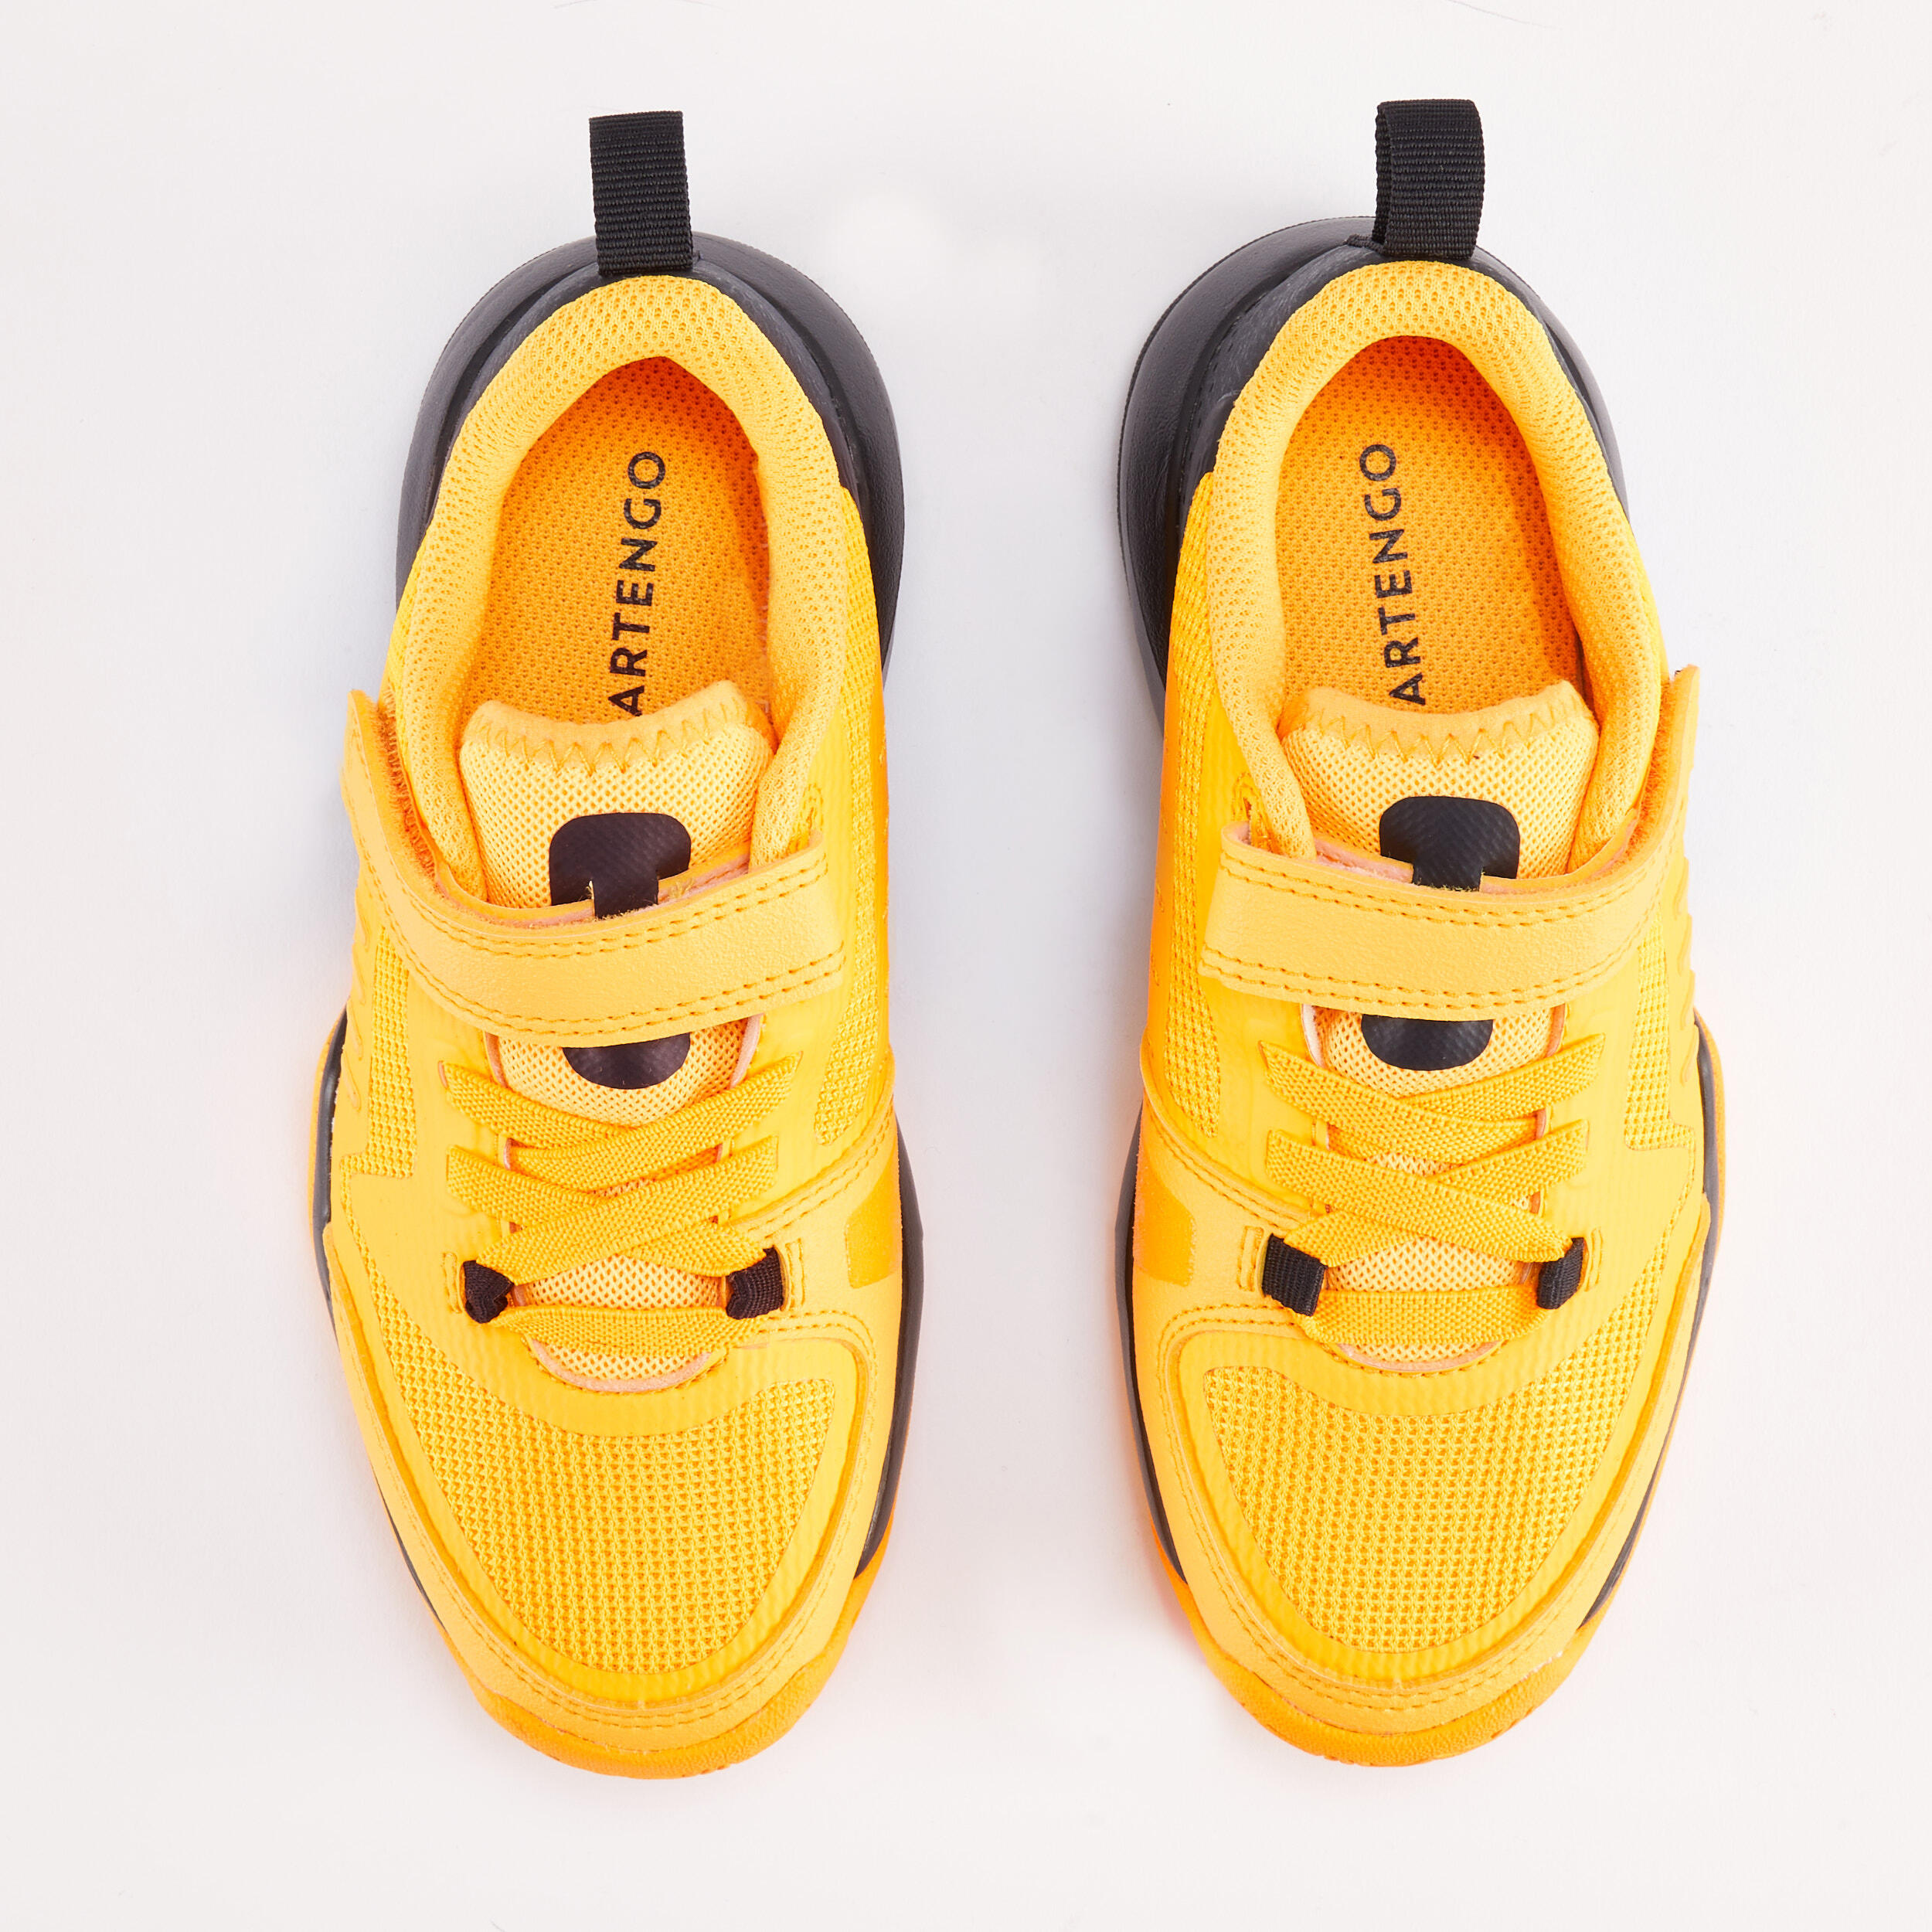 Kids' Rip-Tab Tennis Shoes TS500 Fast KD - Sunfire 9/9